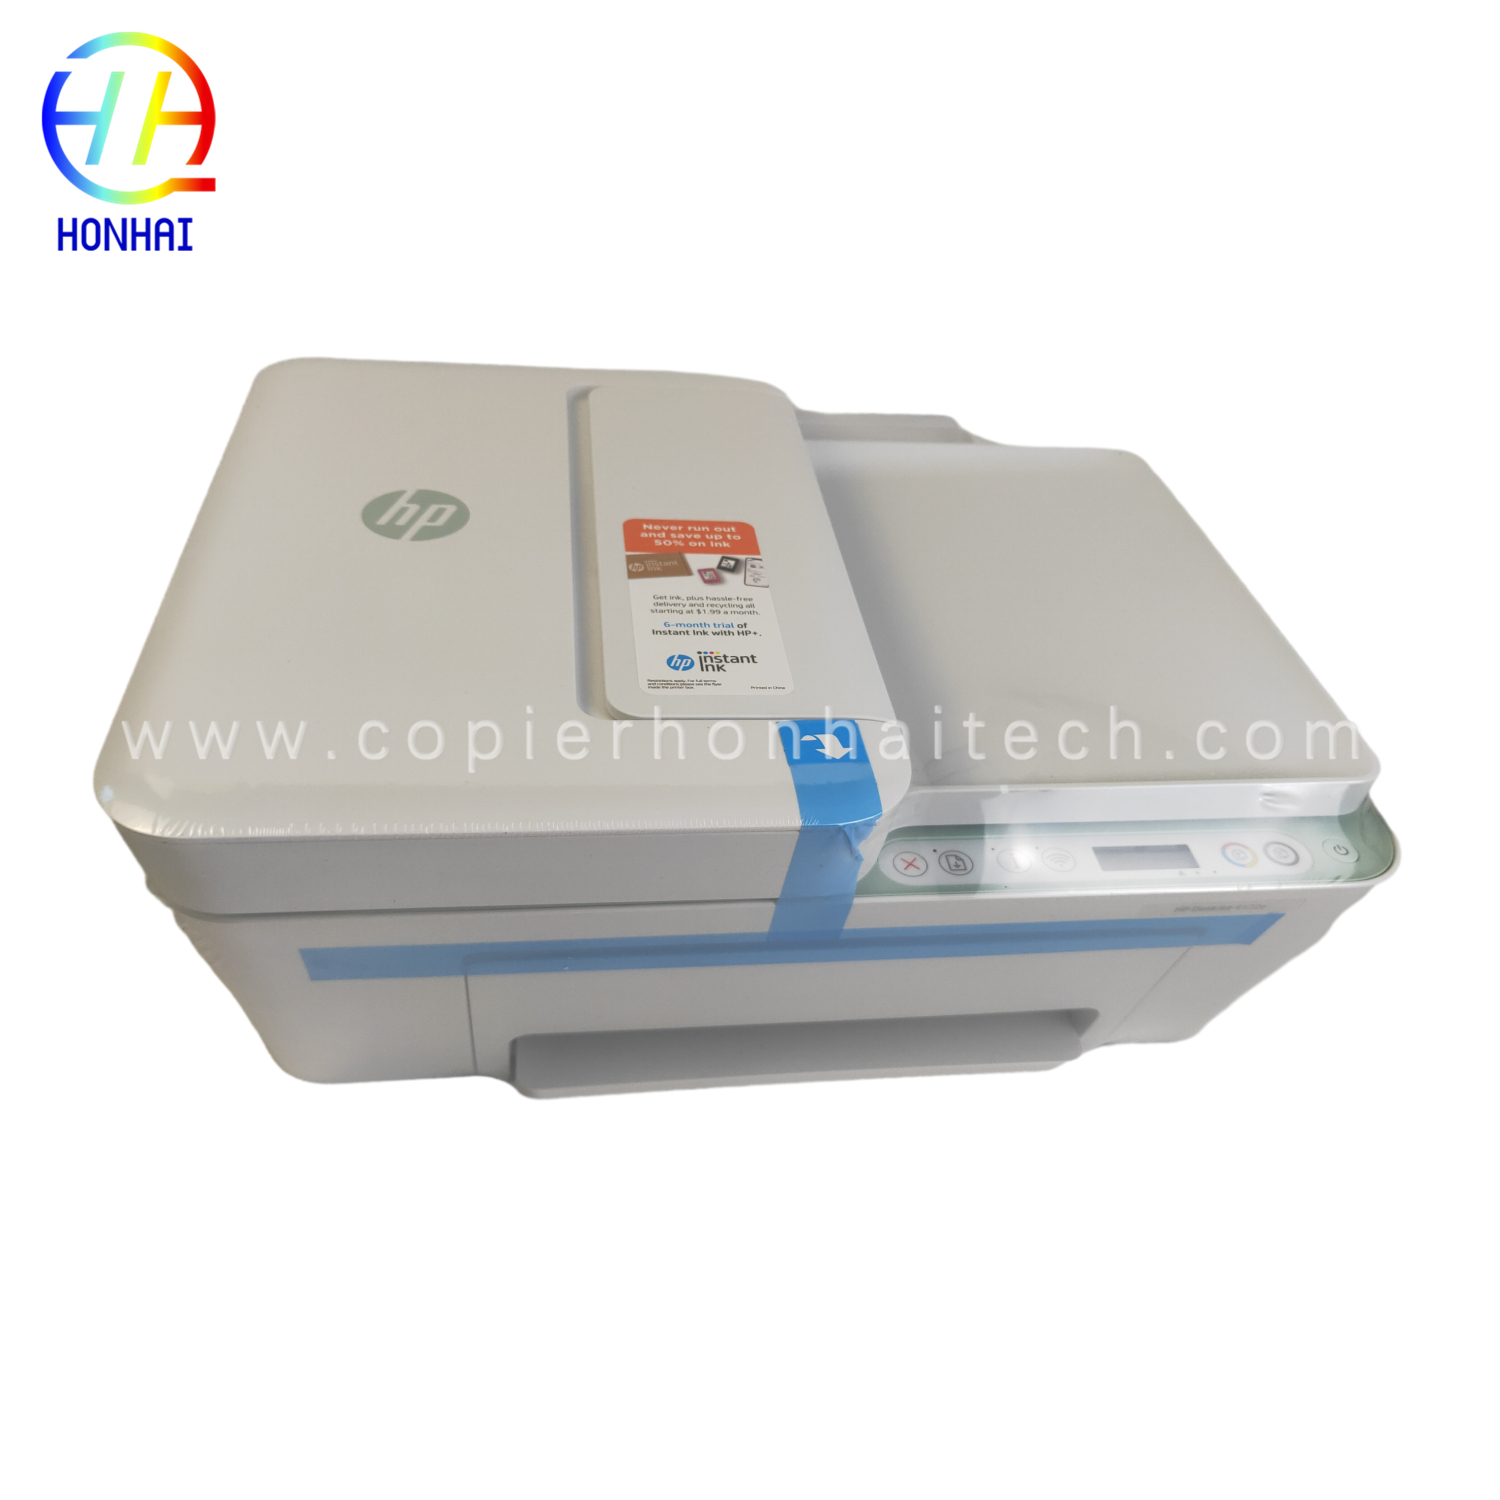 https://www.copierhonhaitech.com/original-new-wireless-printer-for-hp-deskjet-4122e-all-in-one-printer-scan-and-copy-home-office-students-and-home- принтер-26q96a-продукт/